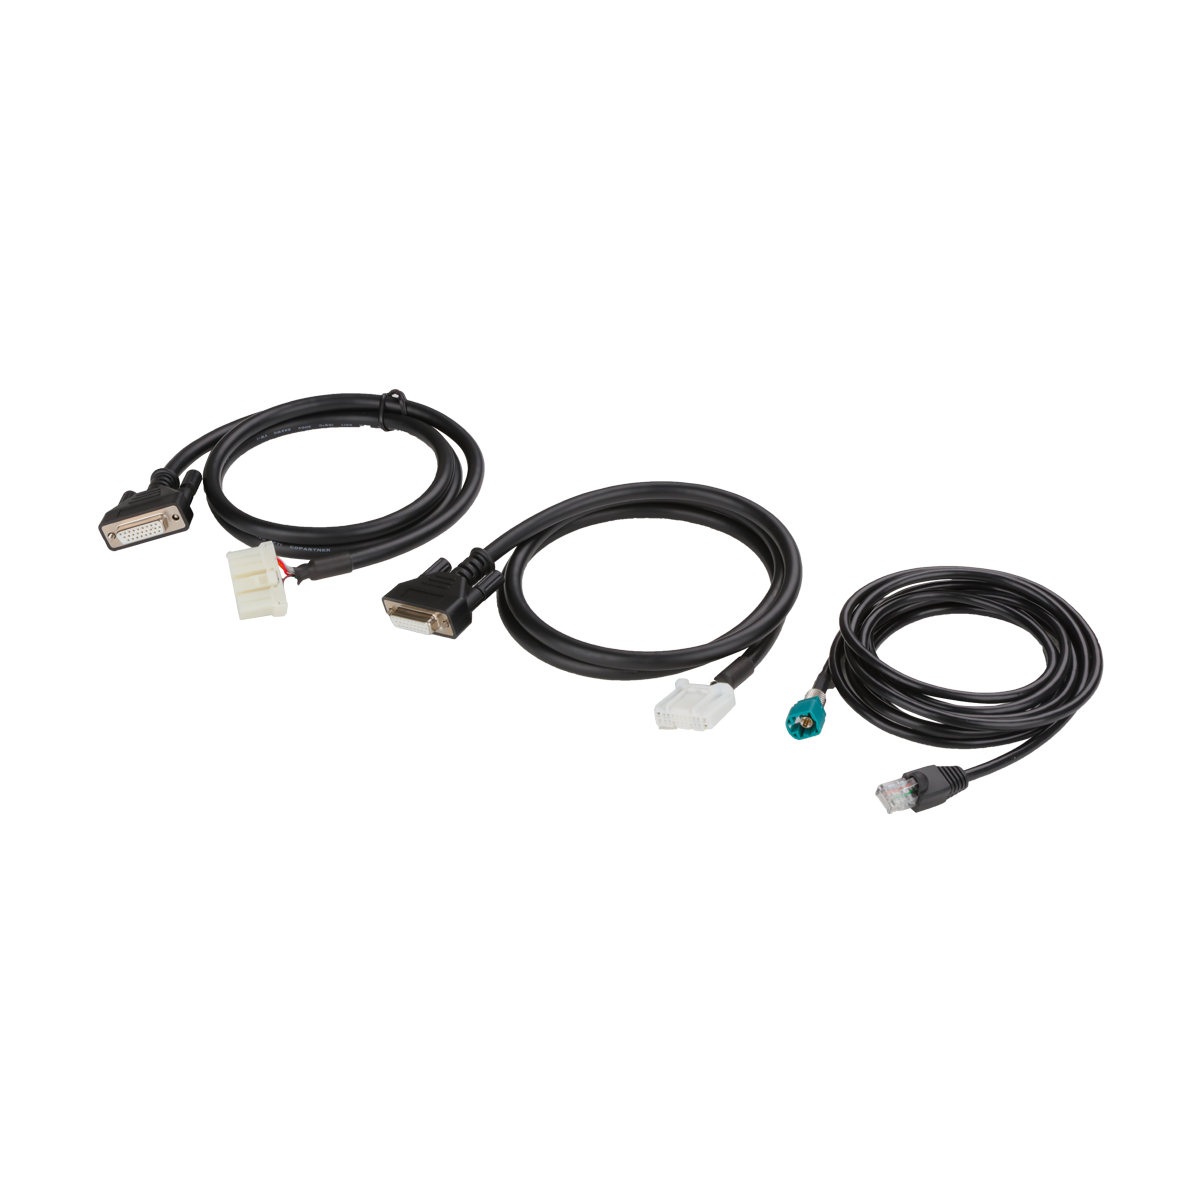 Autel - Tesla Diagnostic Adapter Cables